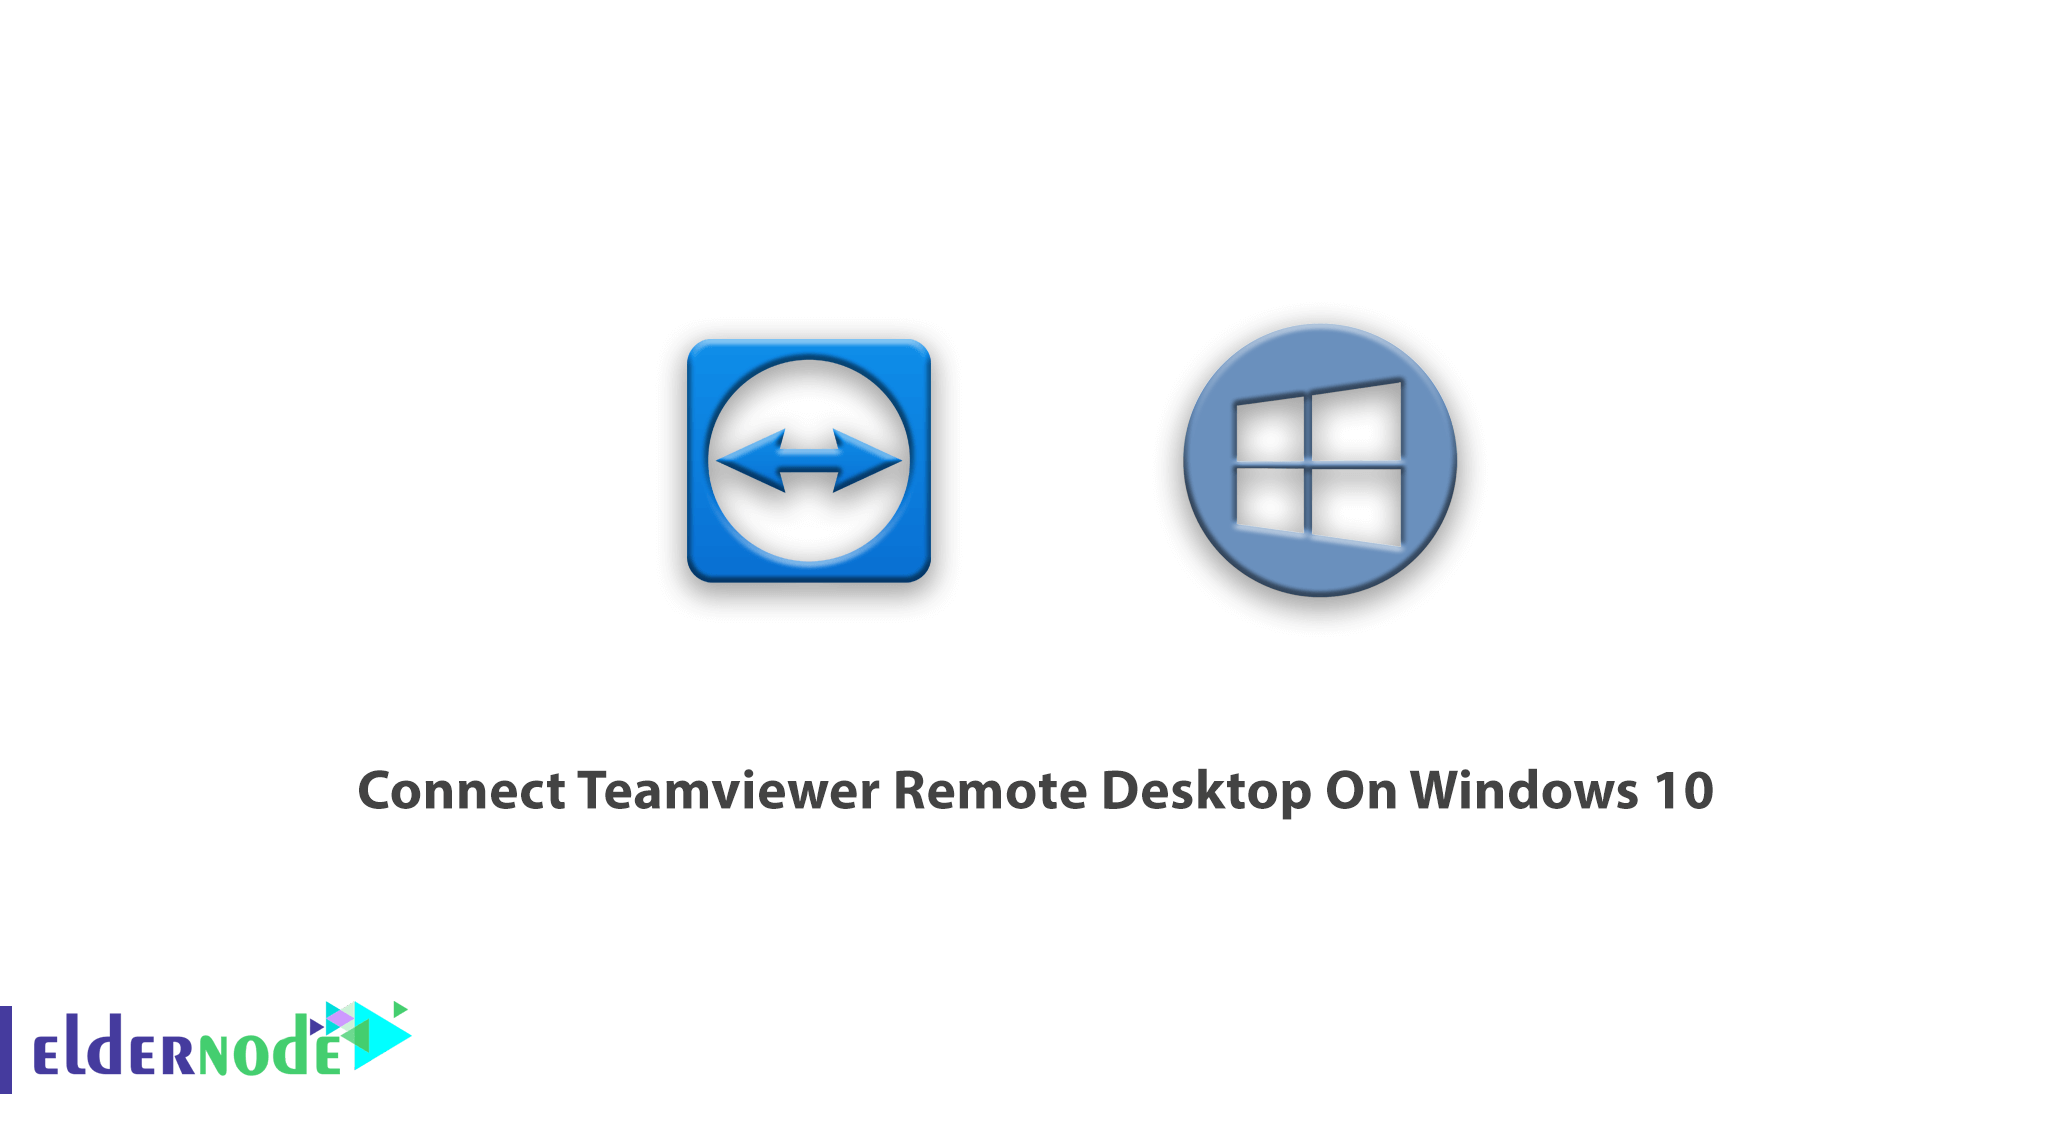 change mac address windows 10 for teamviewer